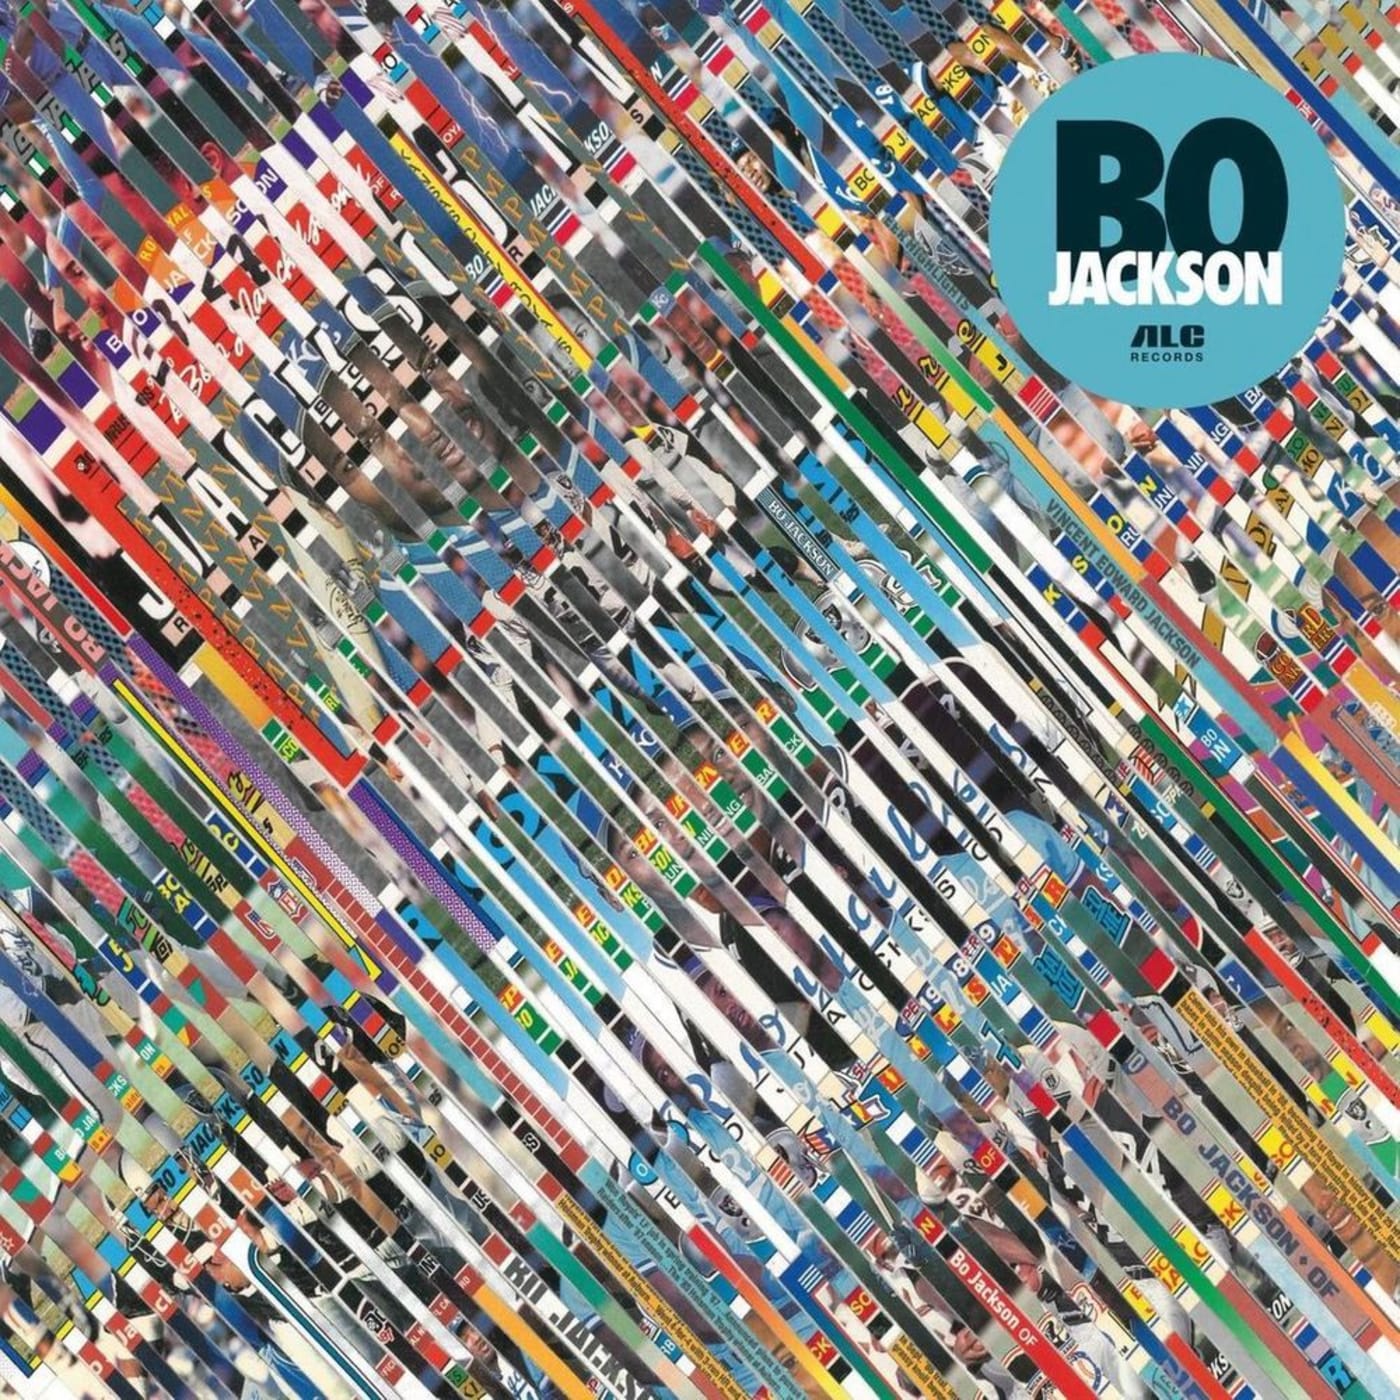 Bo Jackson Album Cover photo.